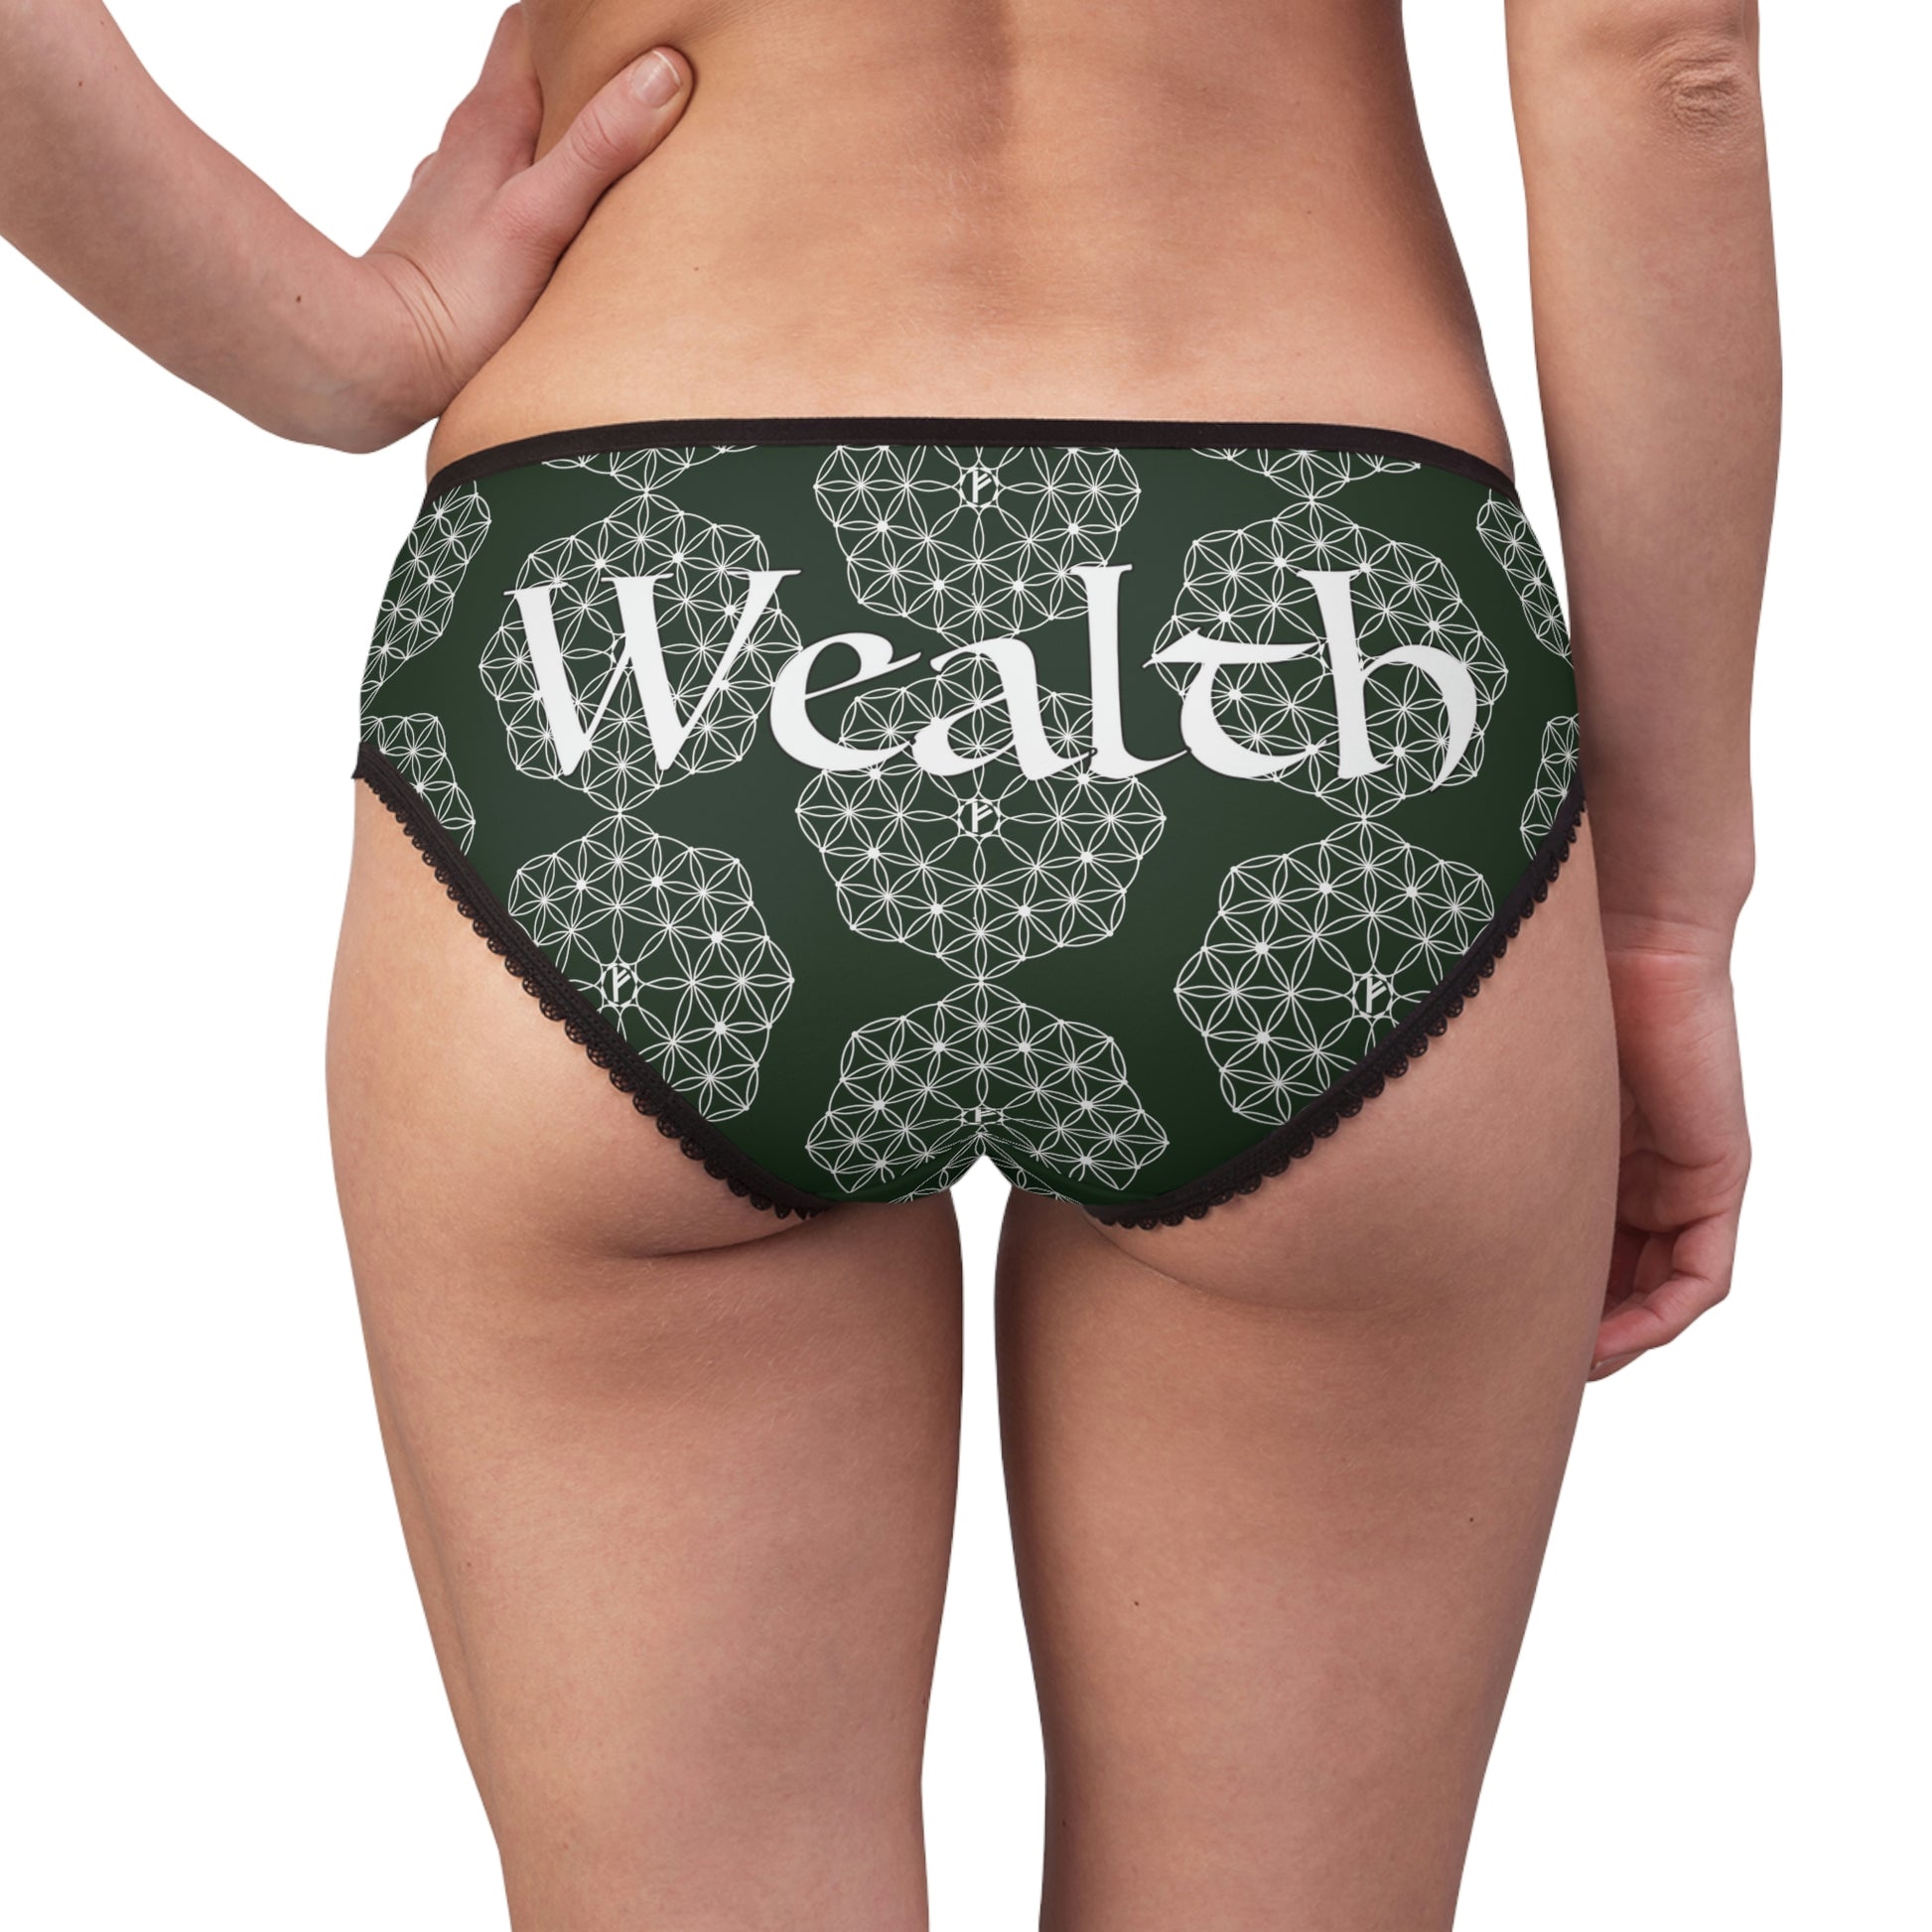 Patti's Power Panties Women's Bikini Brief Panty - "Wealth" with "Fehu" sigil in deep green (Model, back view)